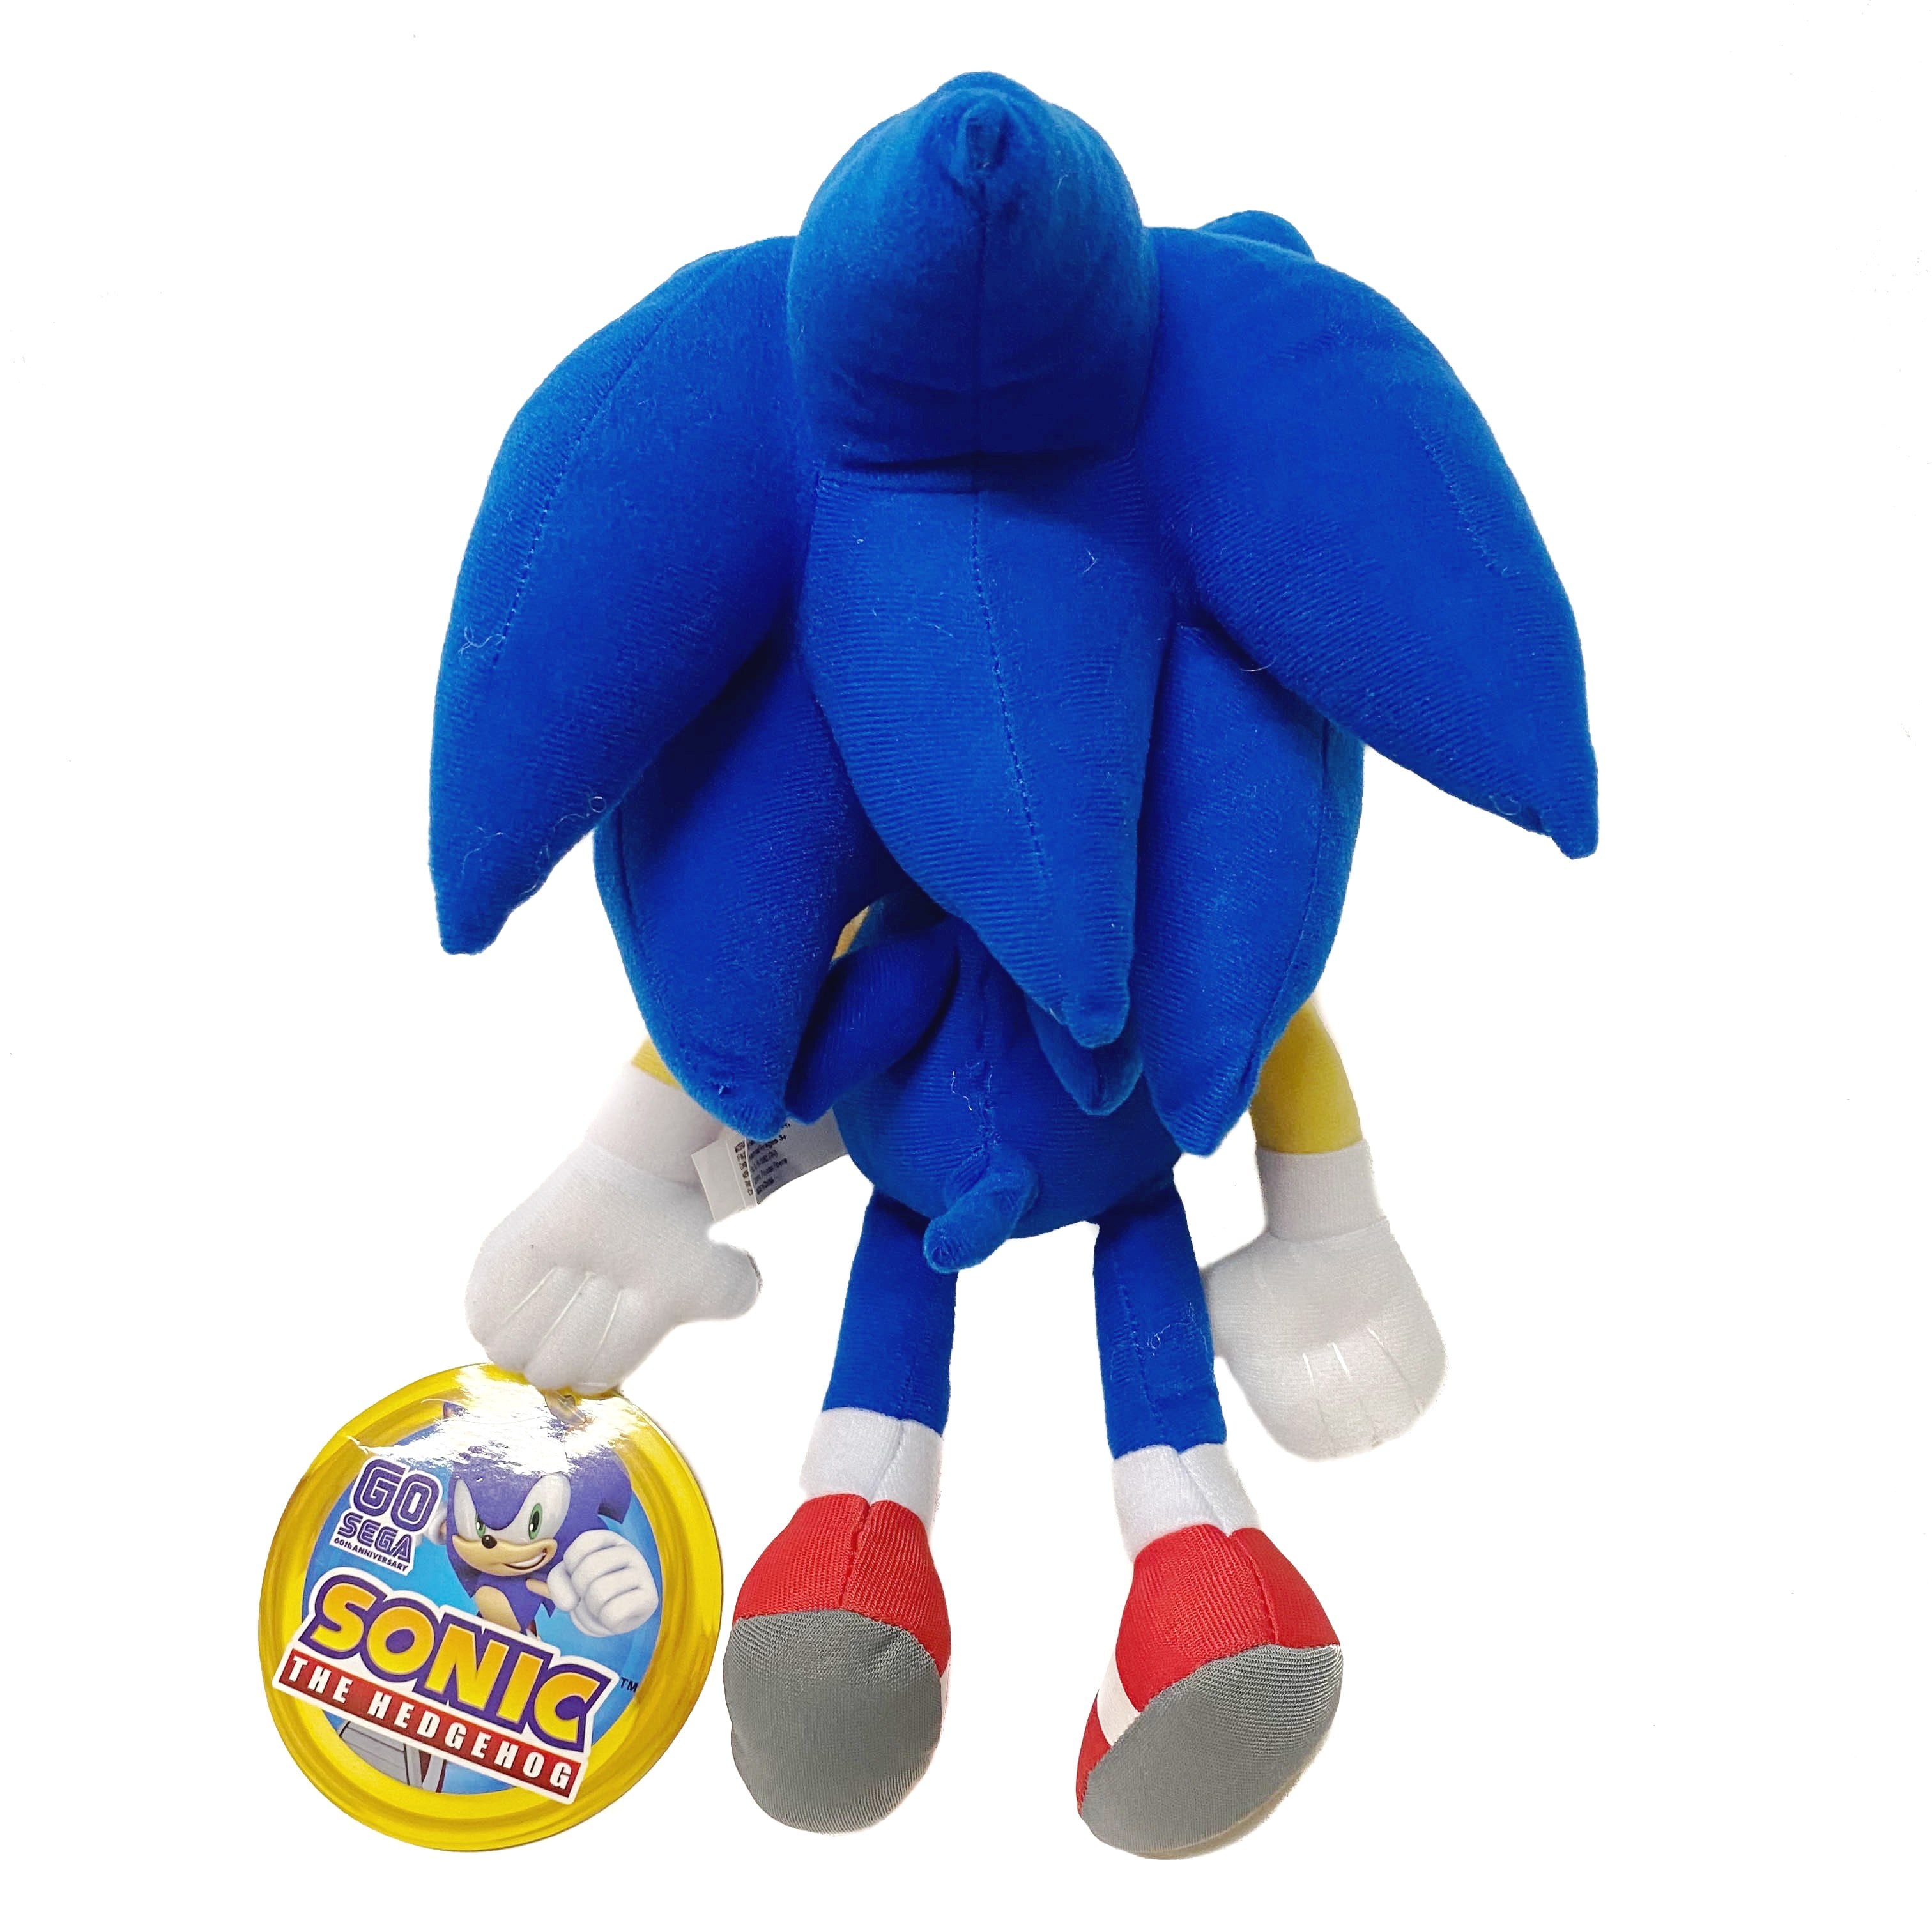  Gavya Sonic Plush Doll,12 inch The Hedgehog 2 The